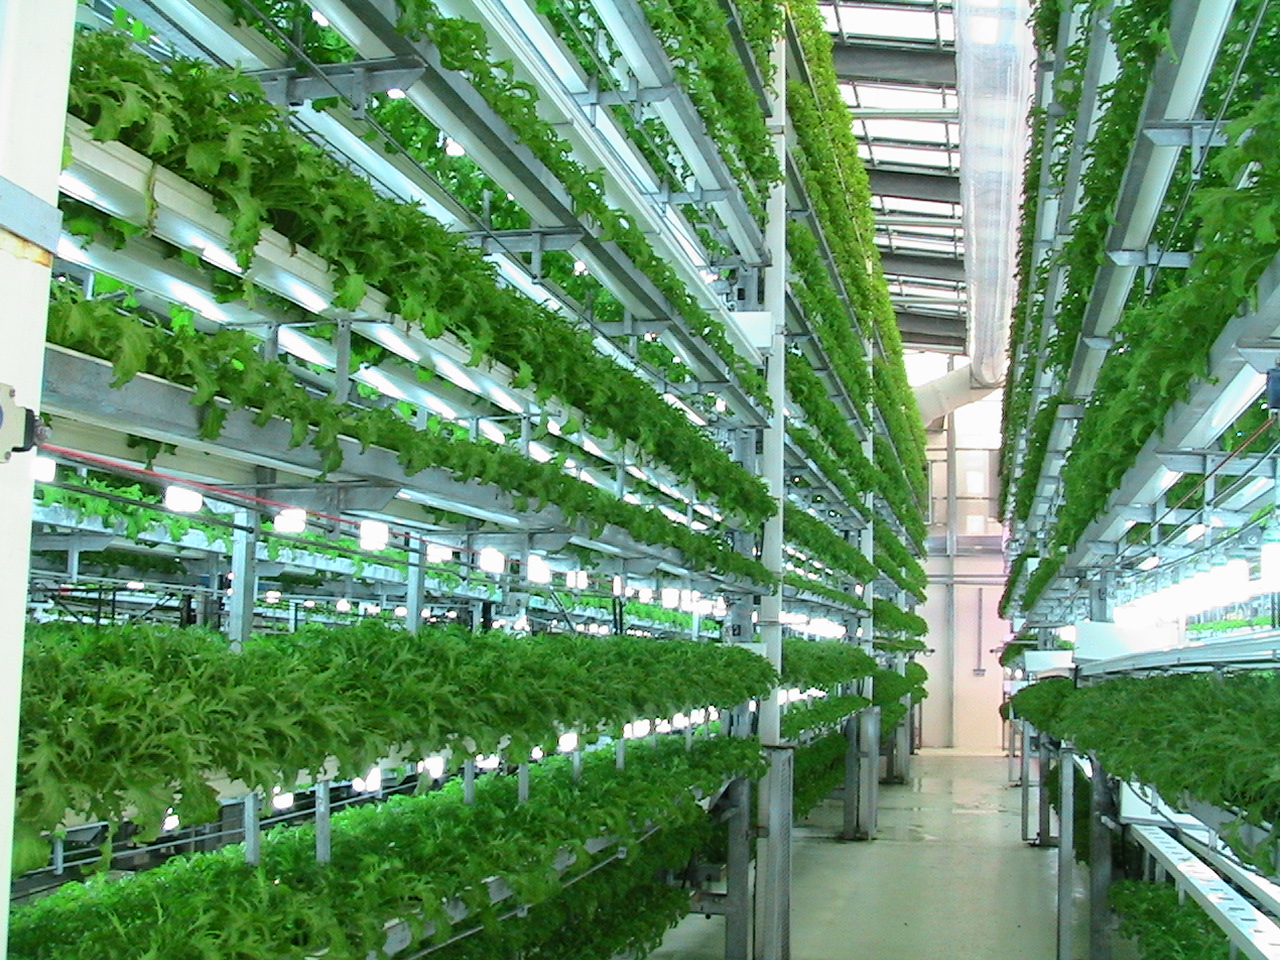 hydroponics gardening massive scale